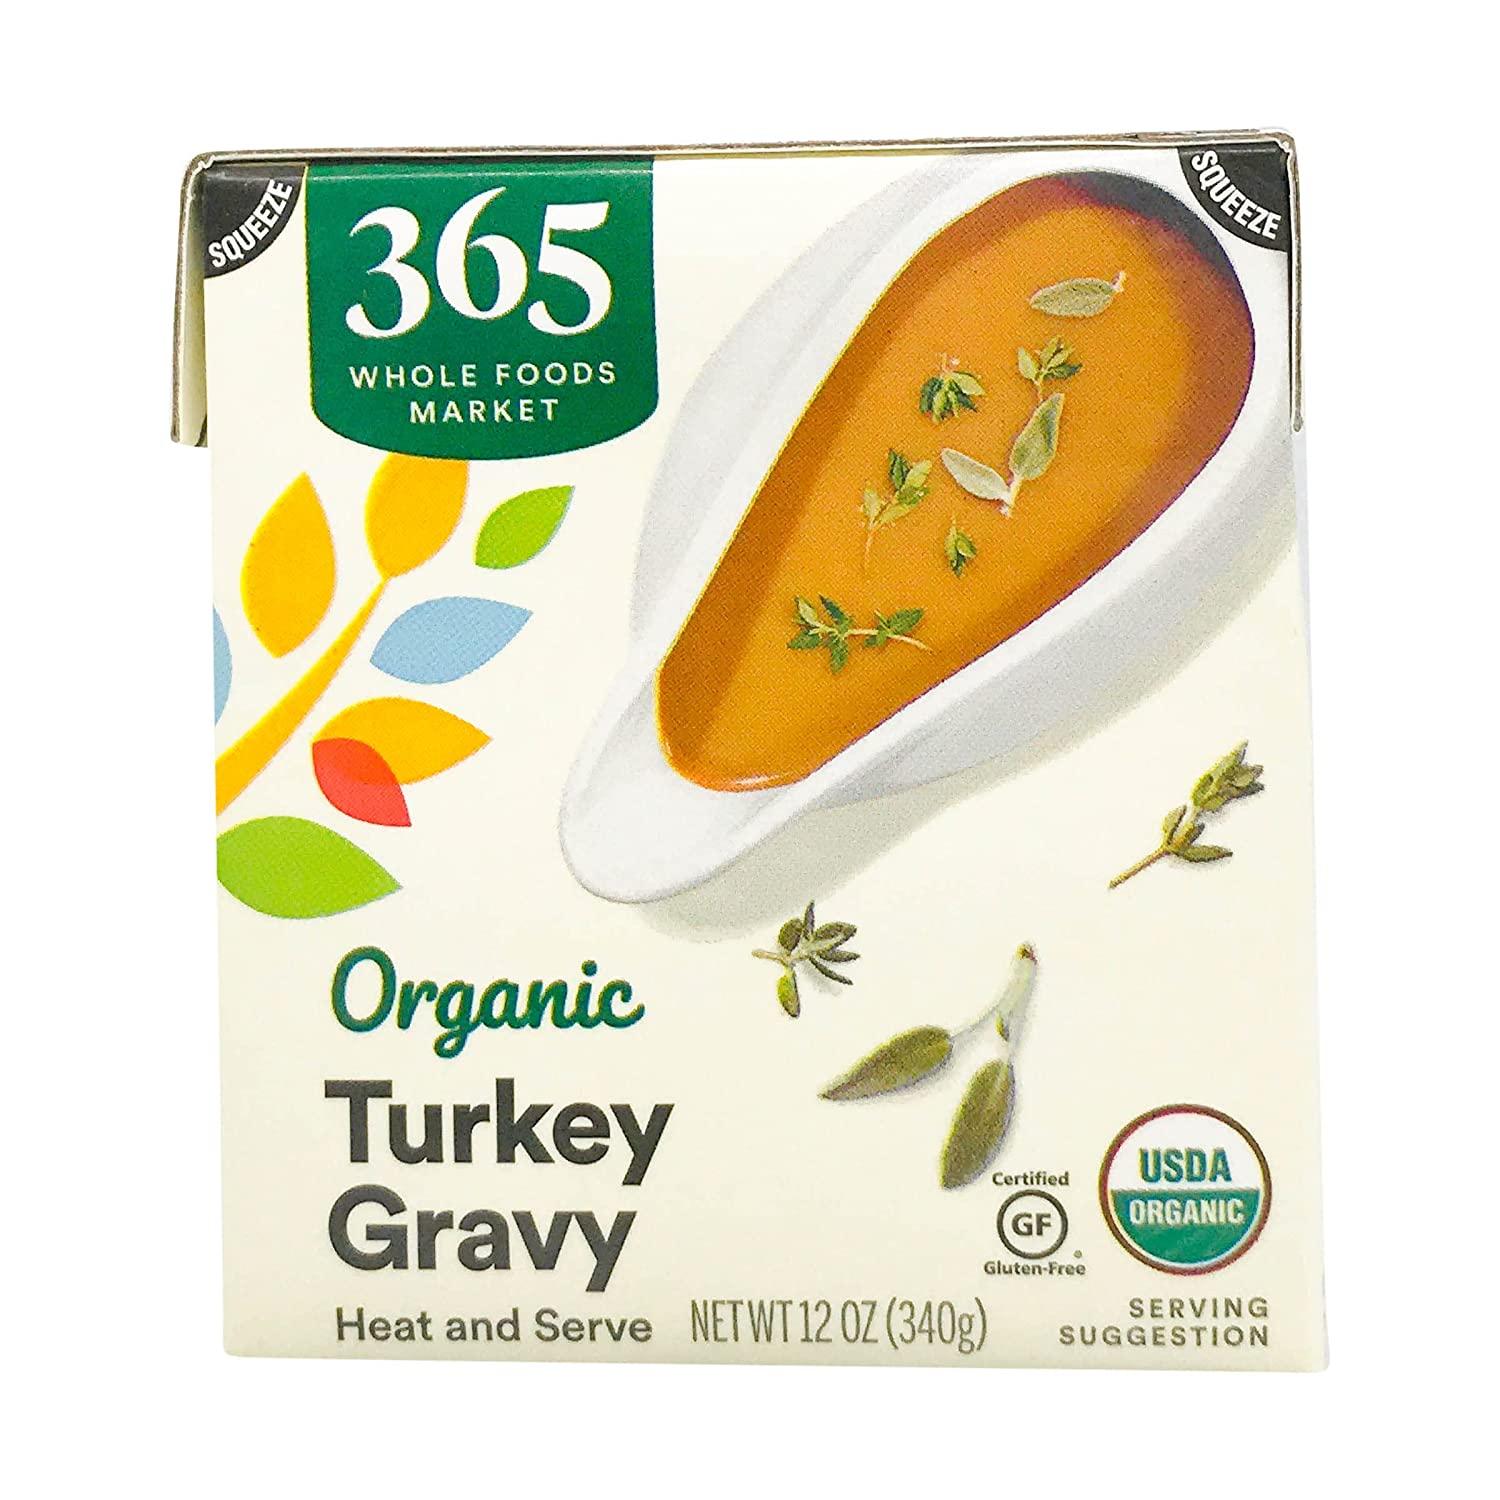 Turkey at Whole Foods Market